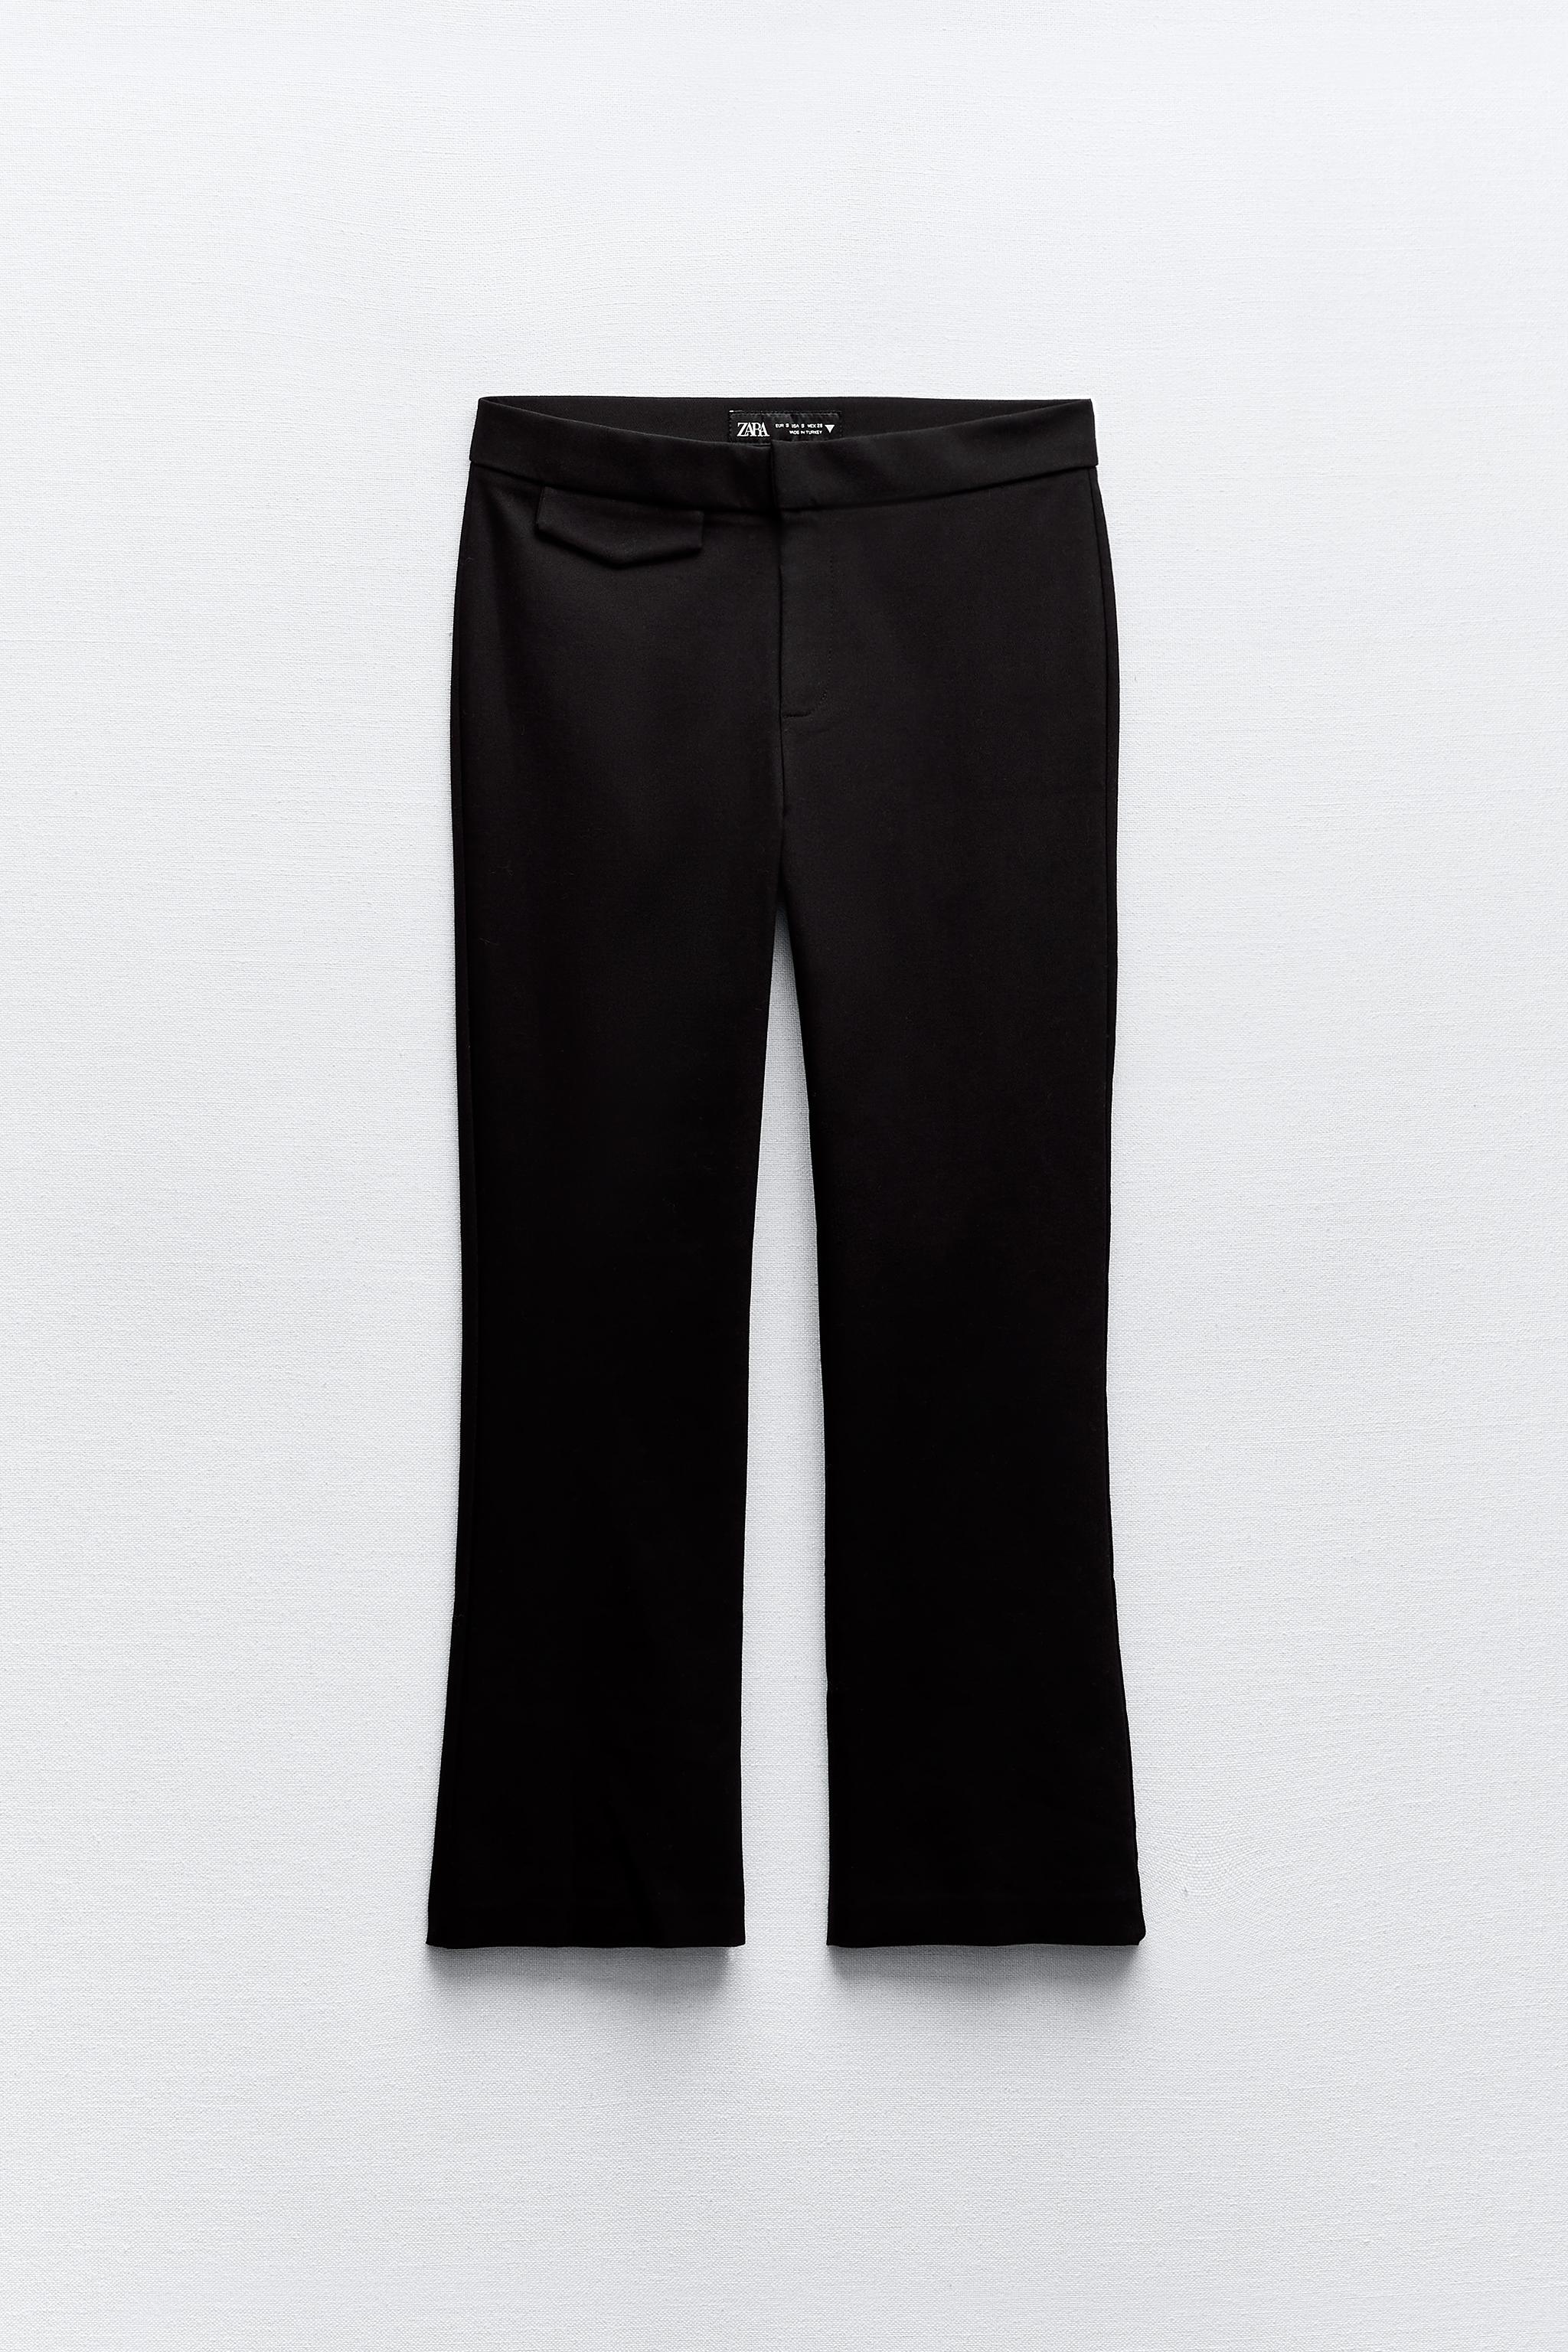 Zara, Pants & Jumpsuits, Zara Flared Shiny Metallic Leggings Dress Pants  Size Small